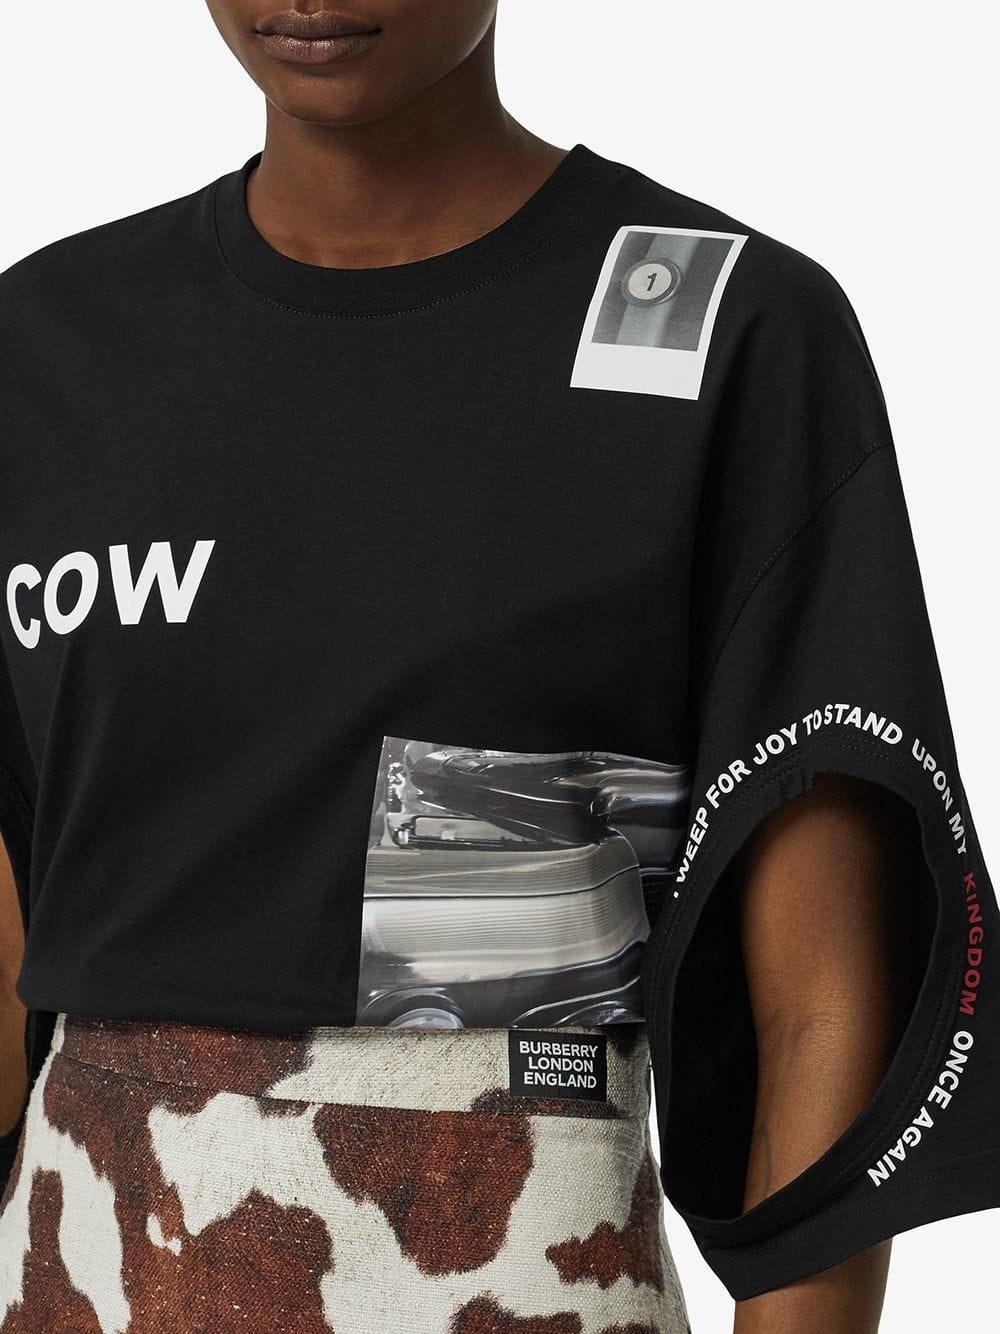 burberry cow t shirt